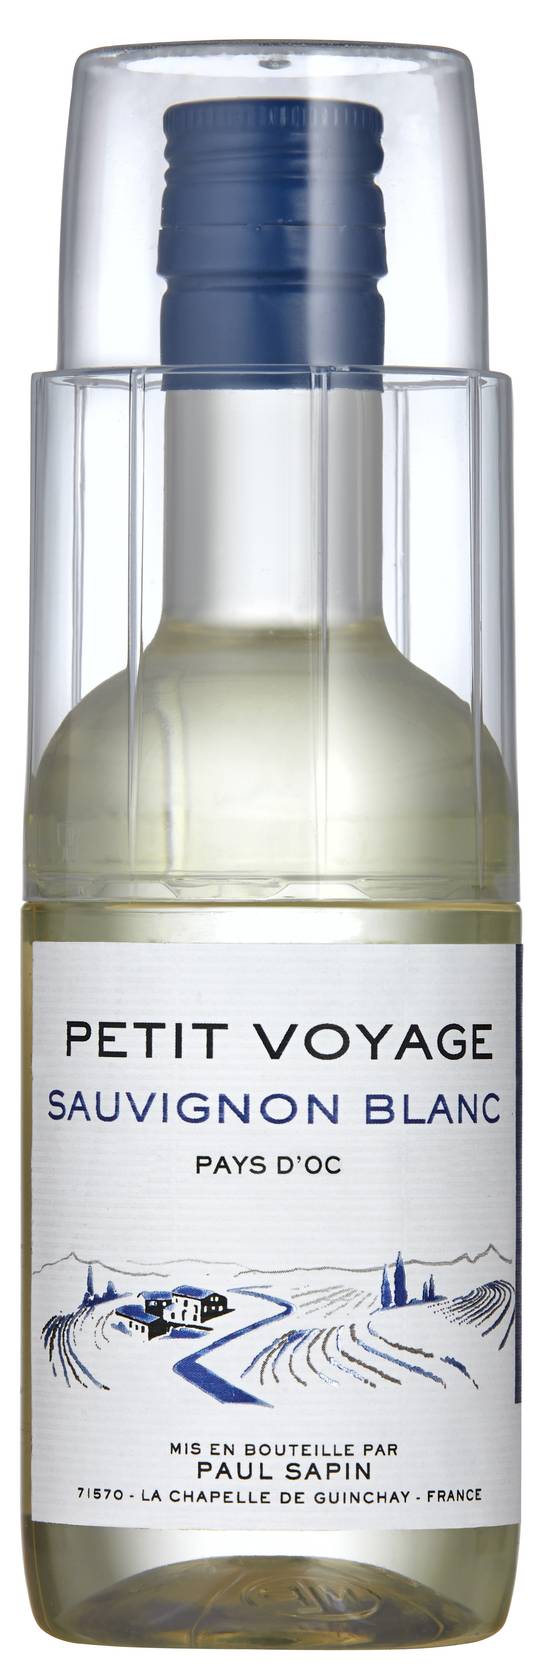 Petit Voyage - Sauvignon pays d'oc blanc (187 ml)